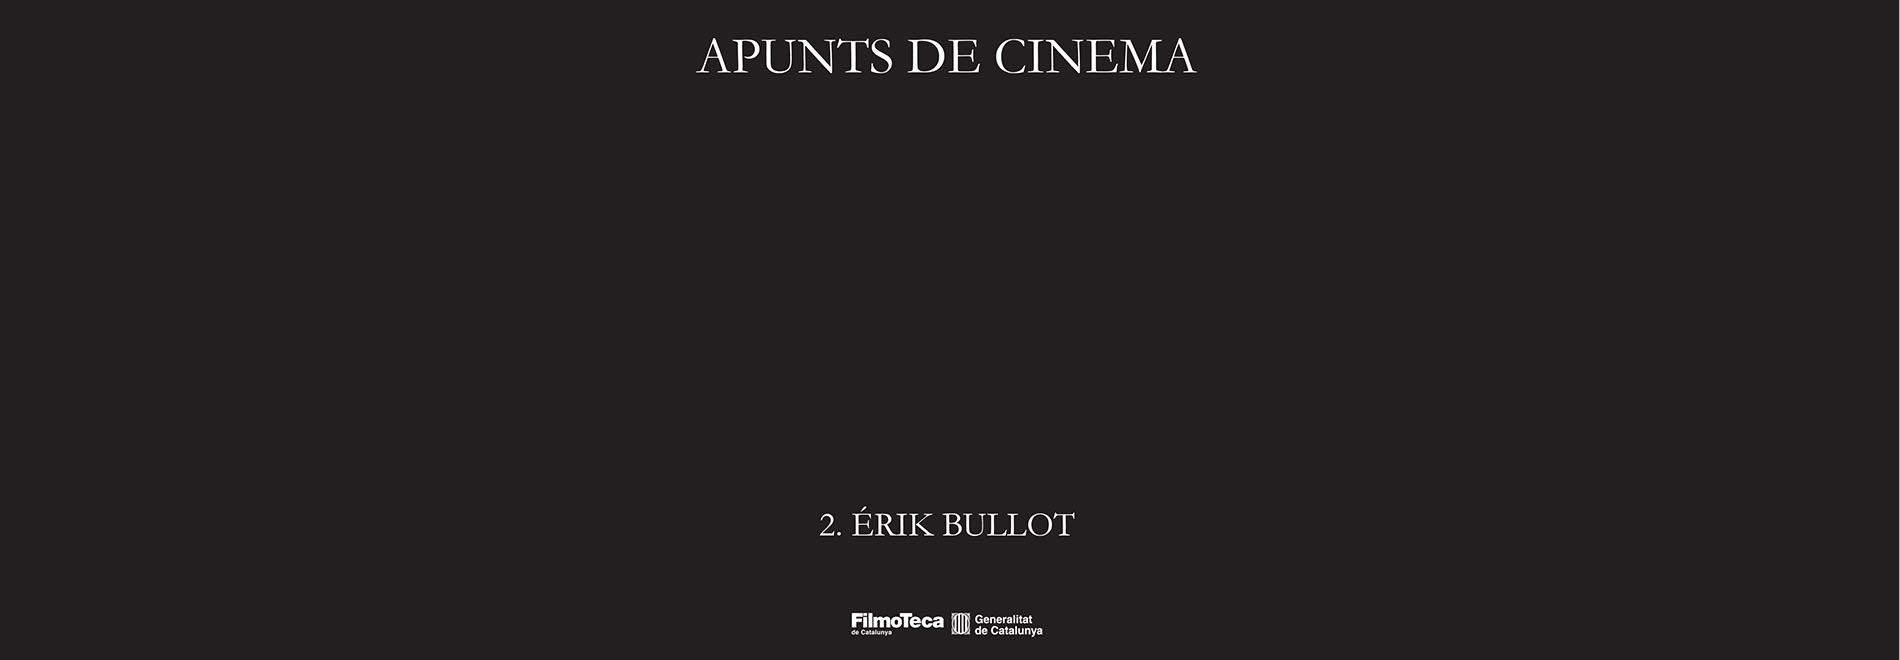 Apunts de cinema 2. Érik Bullot